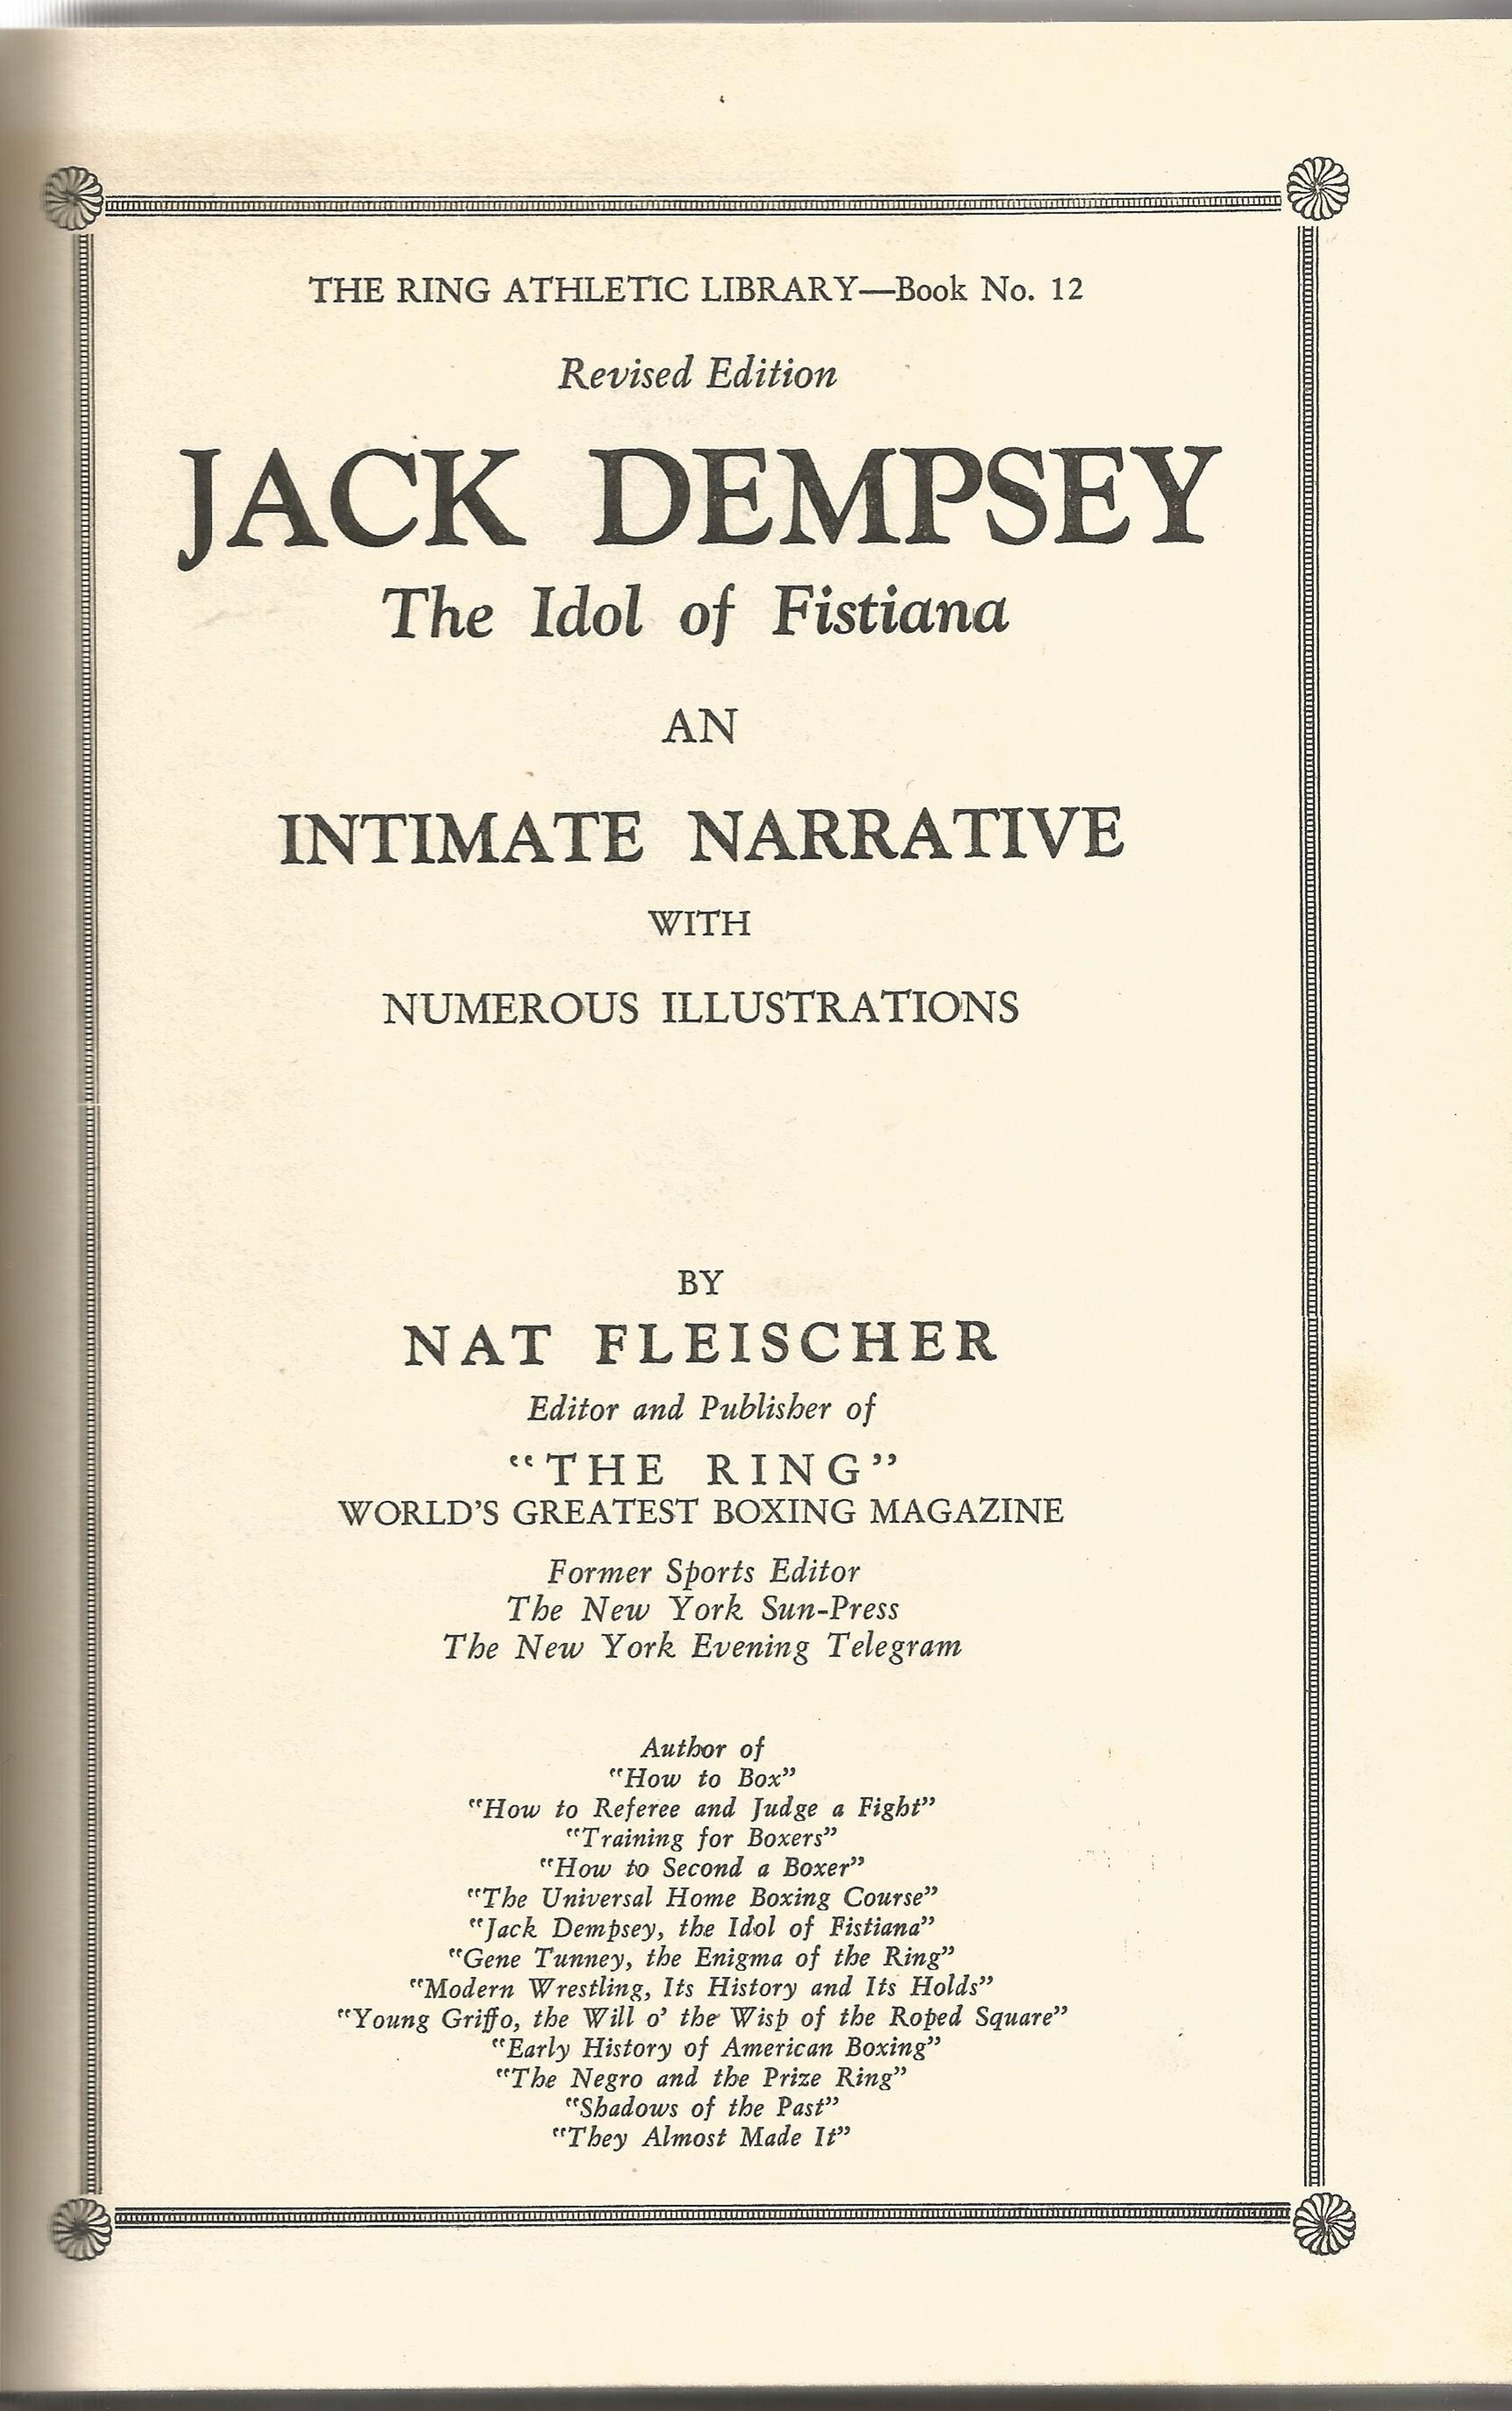 Jack Dempsey The Idol of Fistiana by Nat Fleischer Hardback Book 1936 published by Nat Fleischer - Image 2 of 2